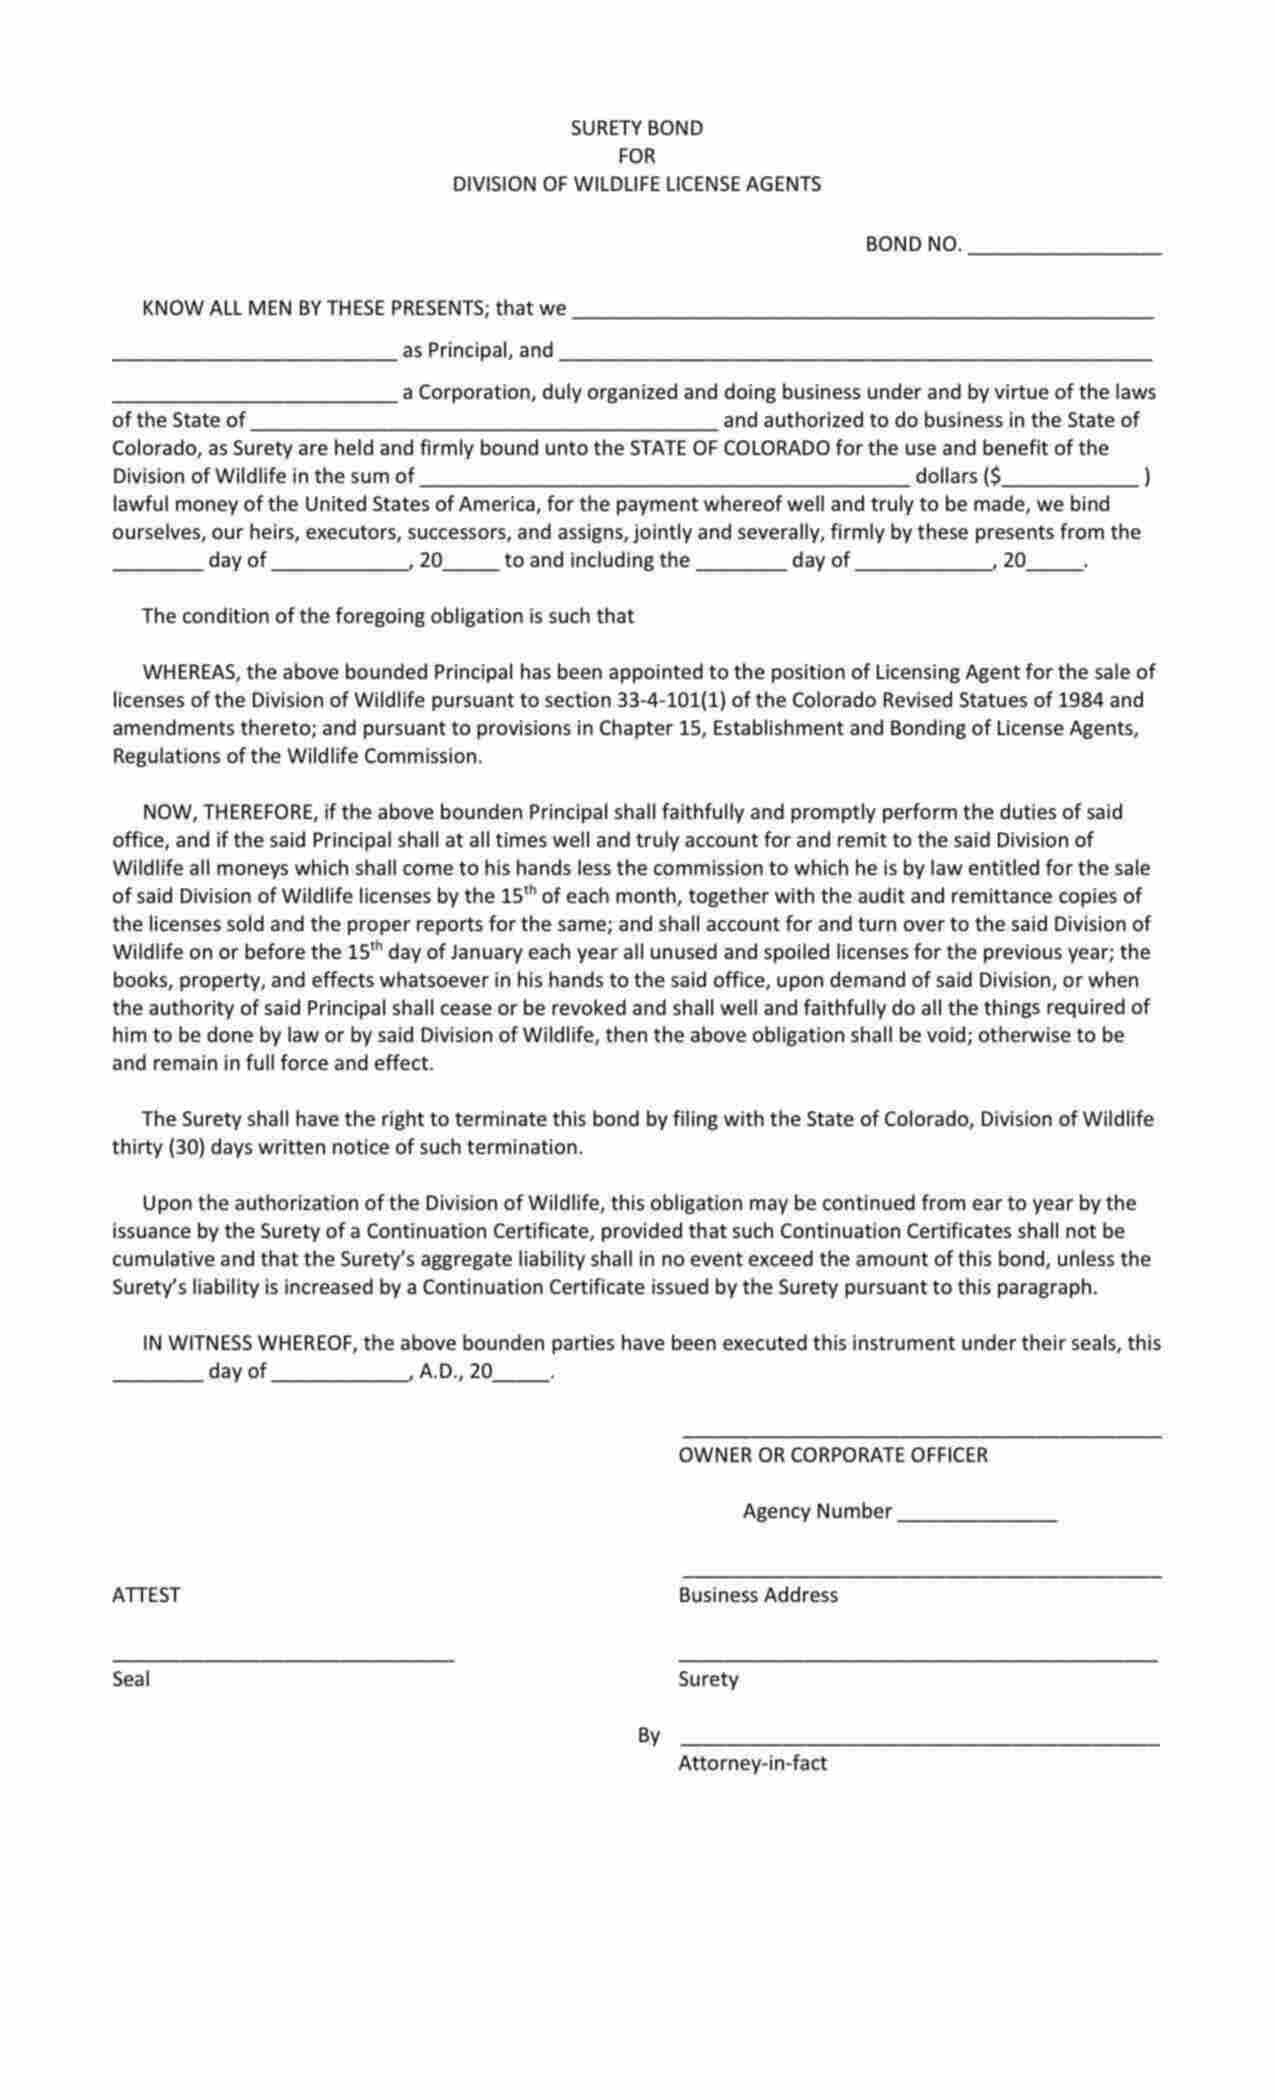 Colorado Division of Wildlife License Agent Bond Form